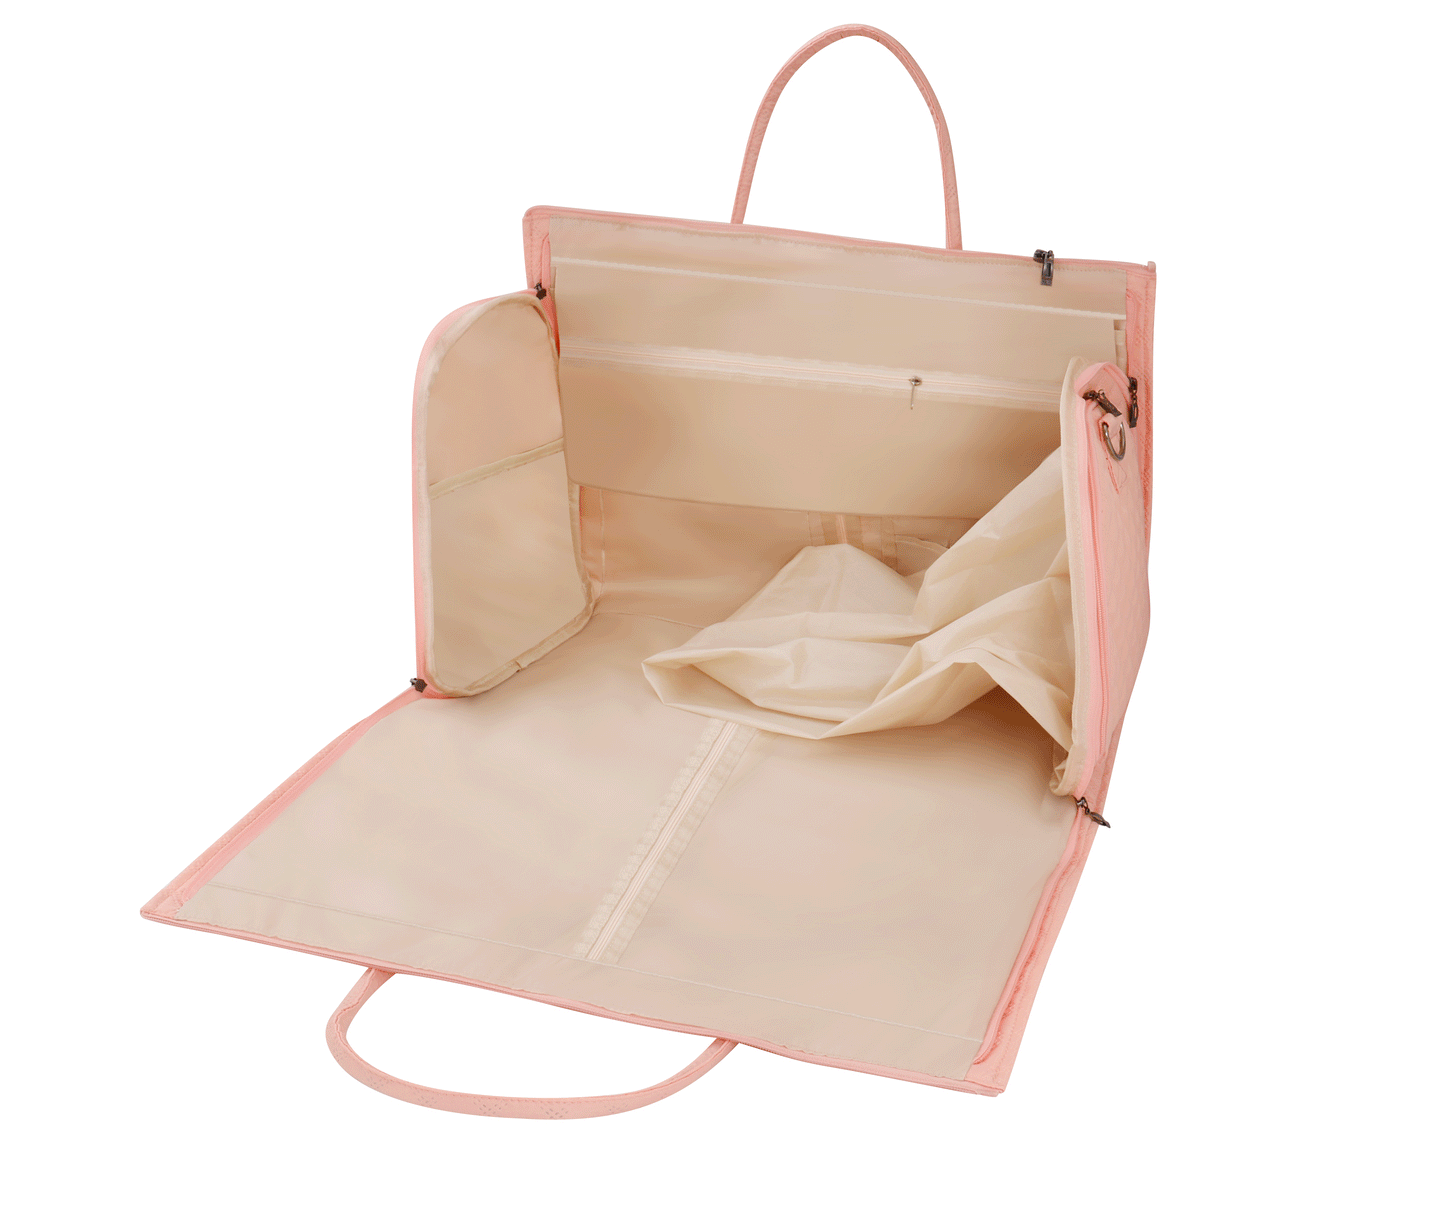 Zentotex® Deluxe Foldable Travel Bag